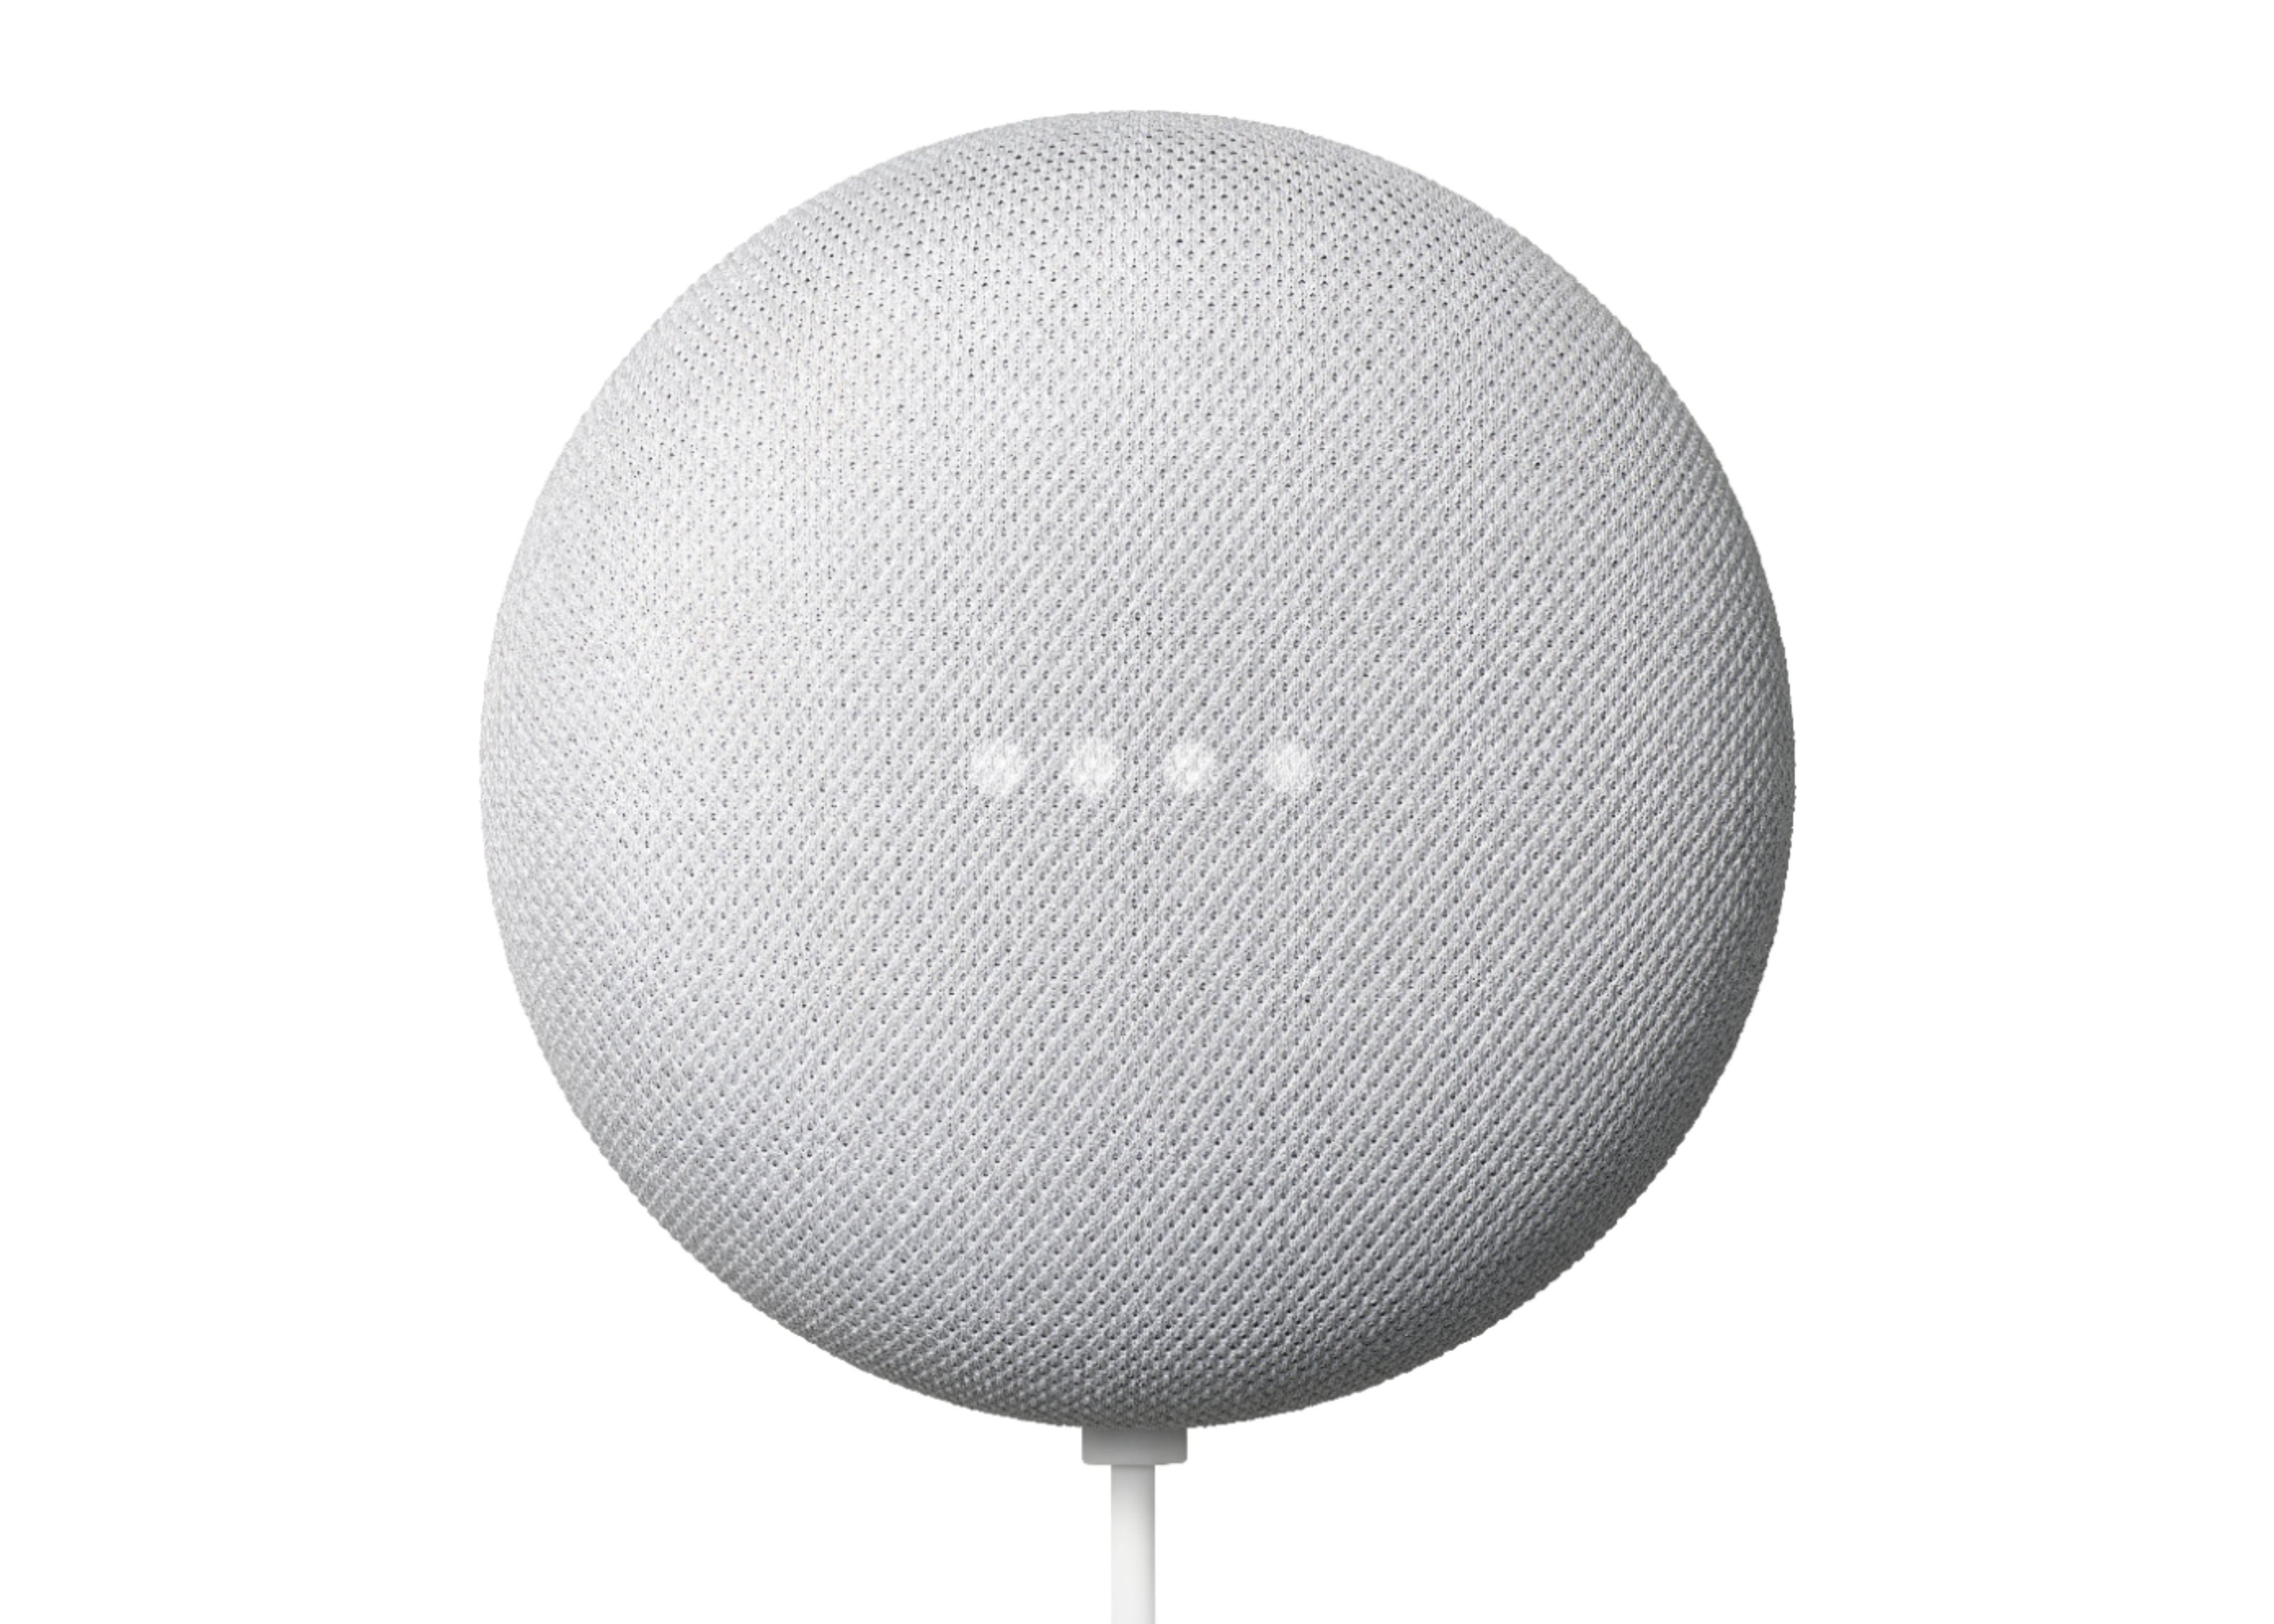 Nest Google Mini Smart Speaker 2nd Generation GA00638-US Chalk - US